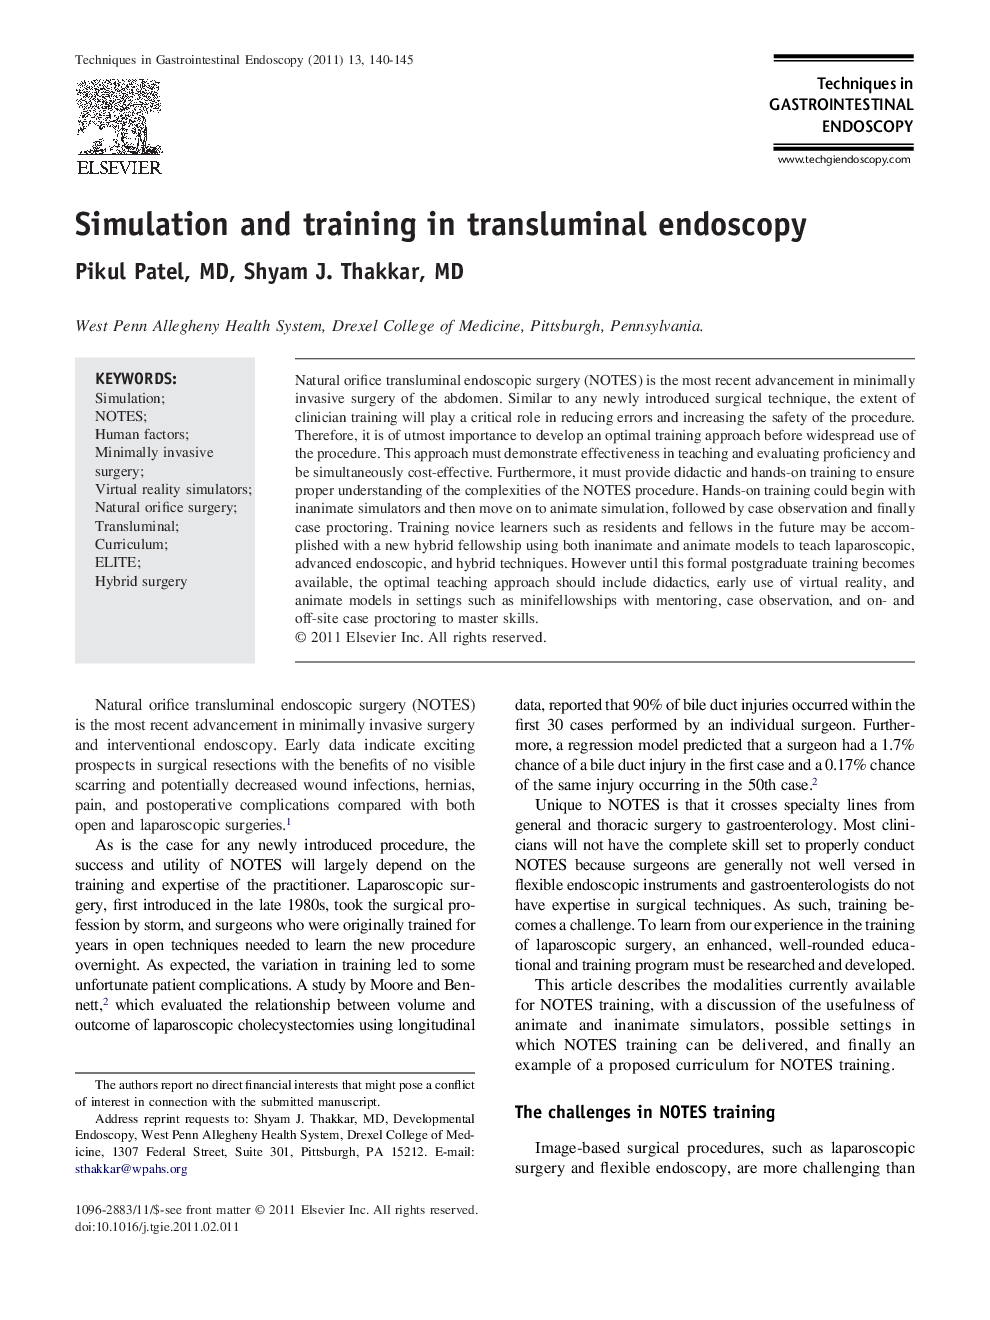 Simulation and training in transluminal endoscopy